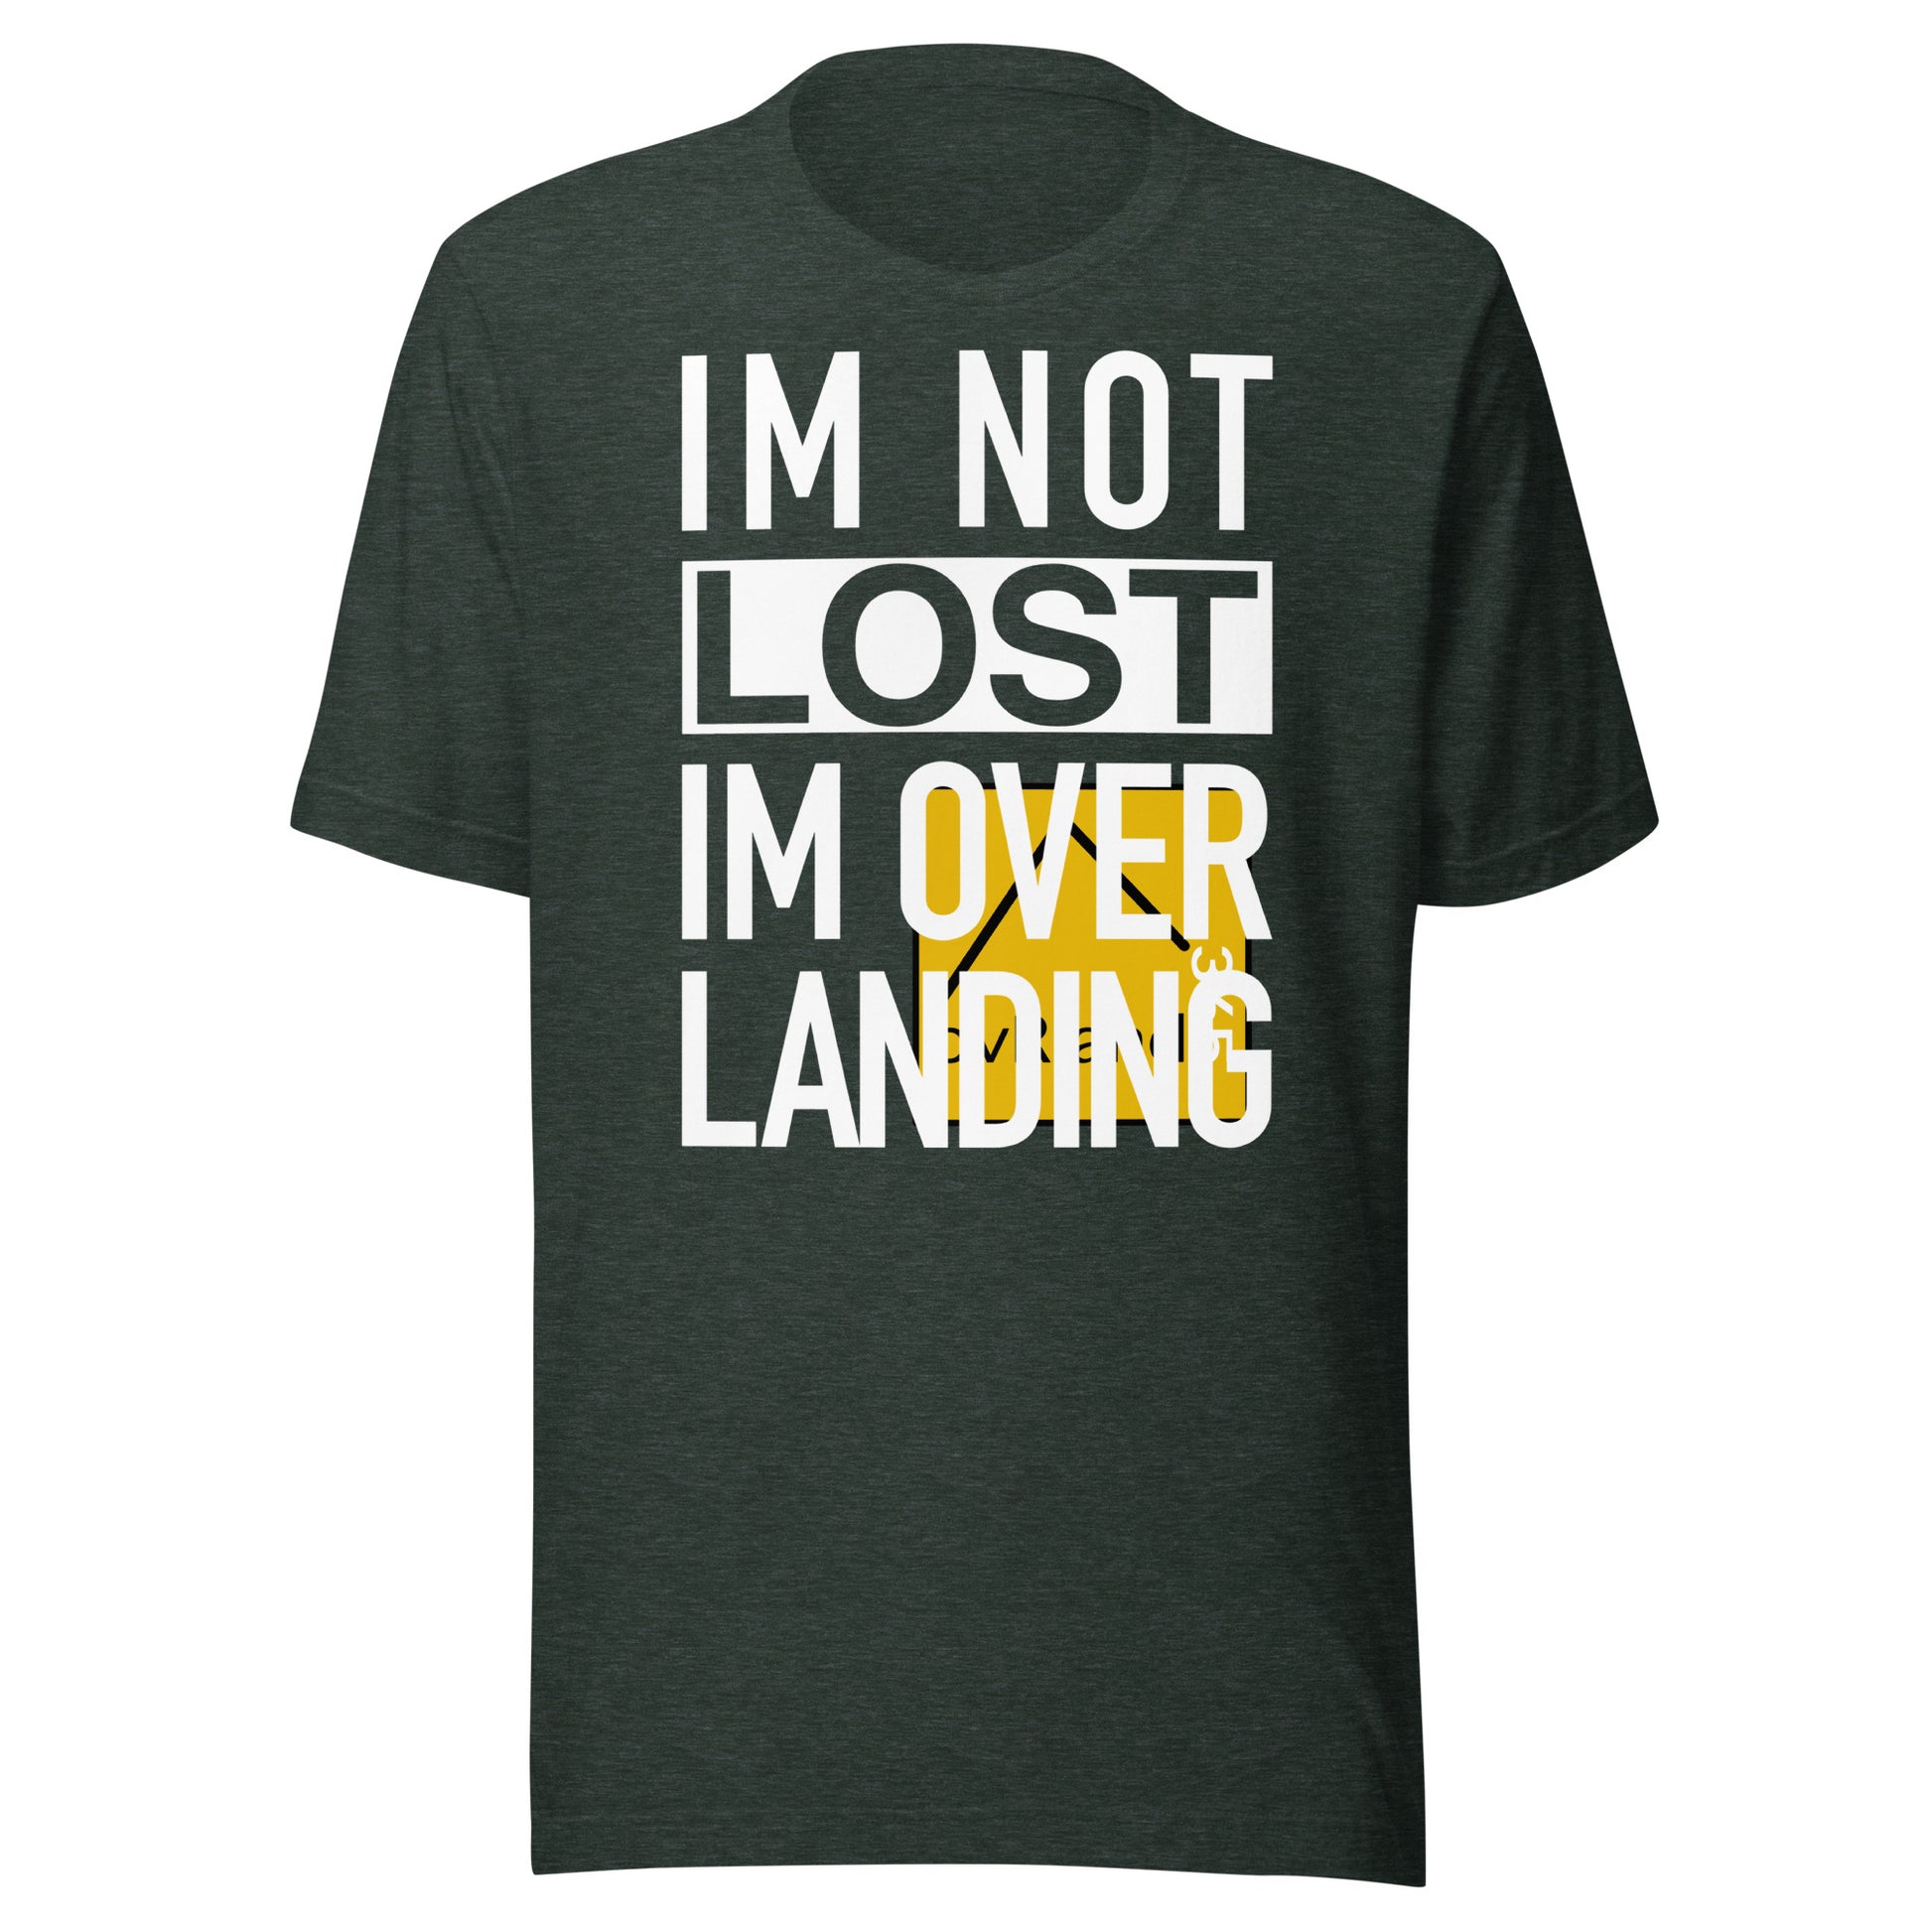 IM NOT LOST IM OVER LANDING - Forest t-shirt. logo misprint. overland365.com